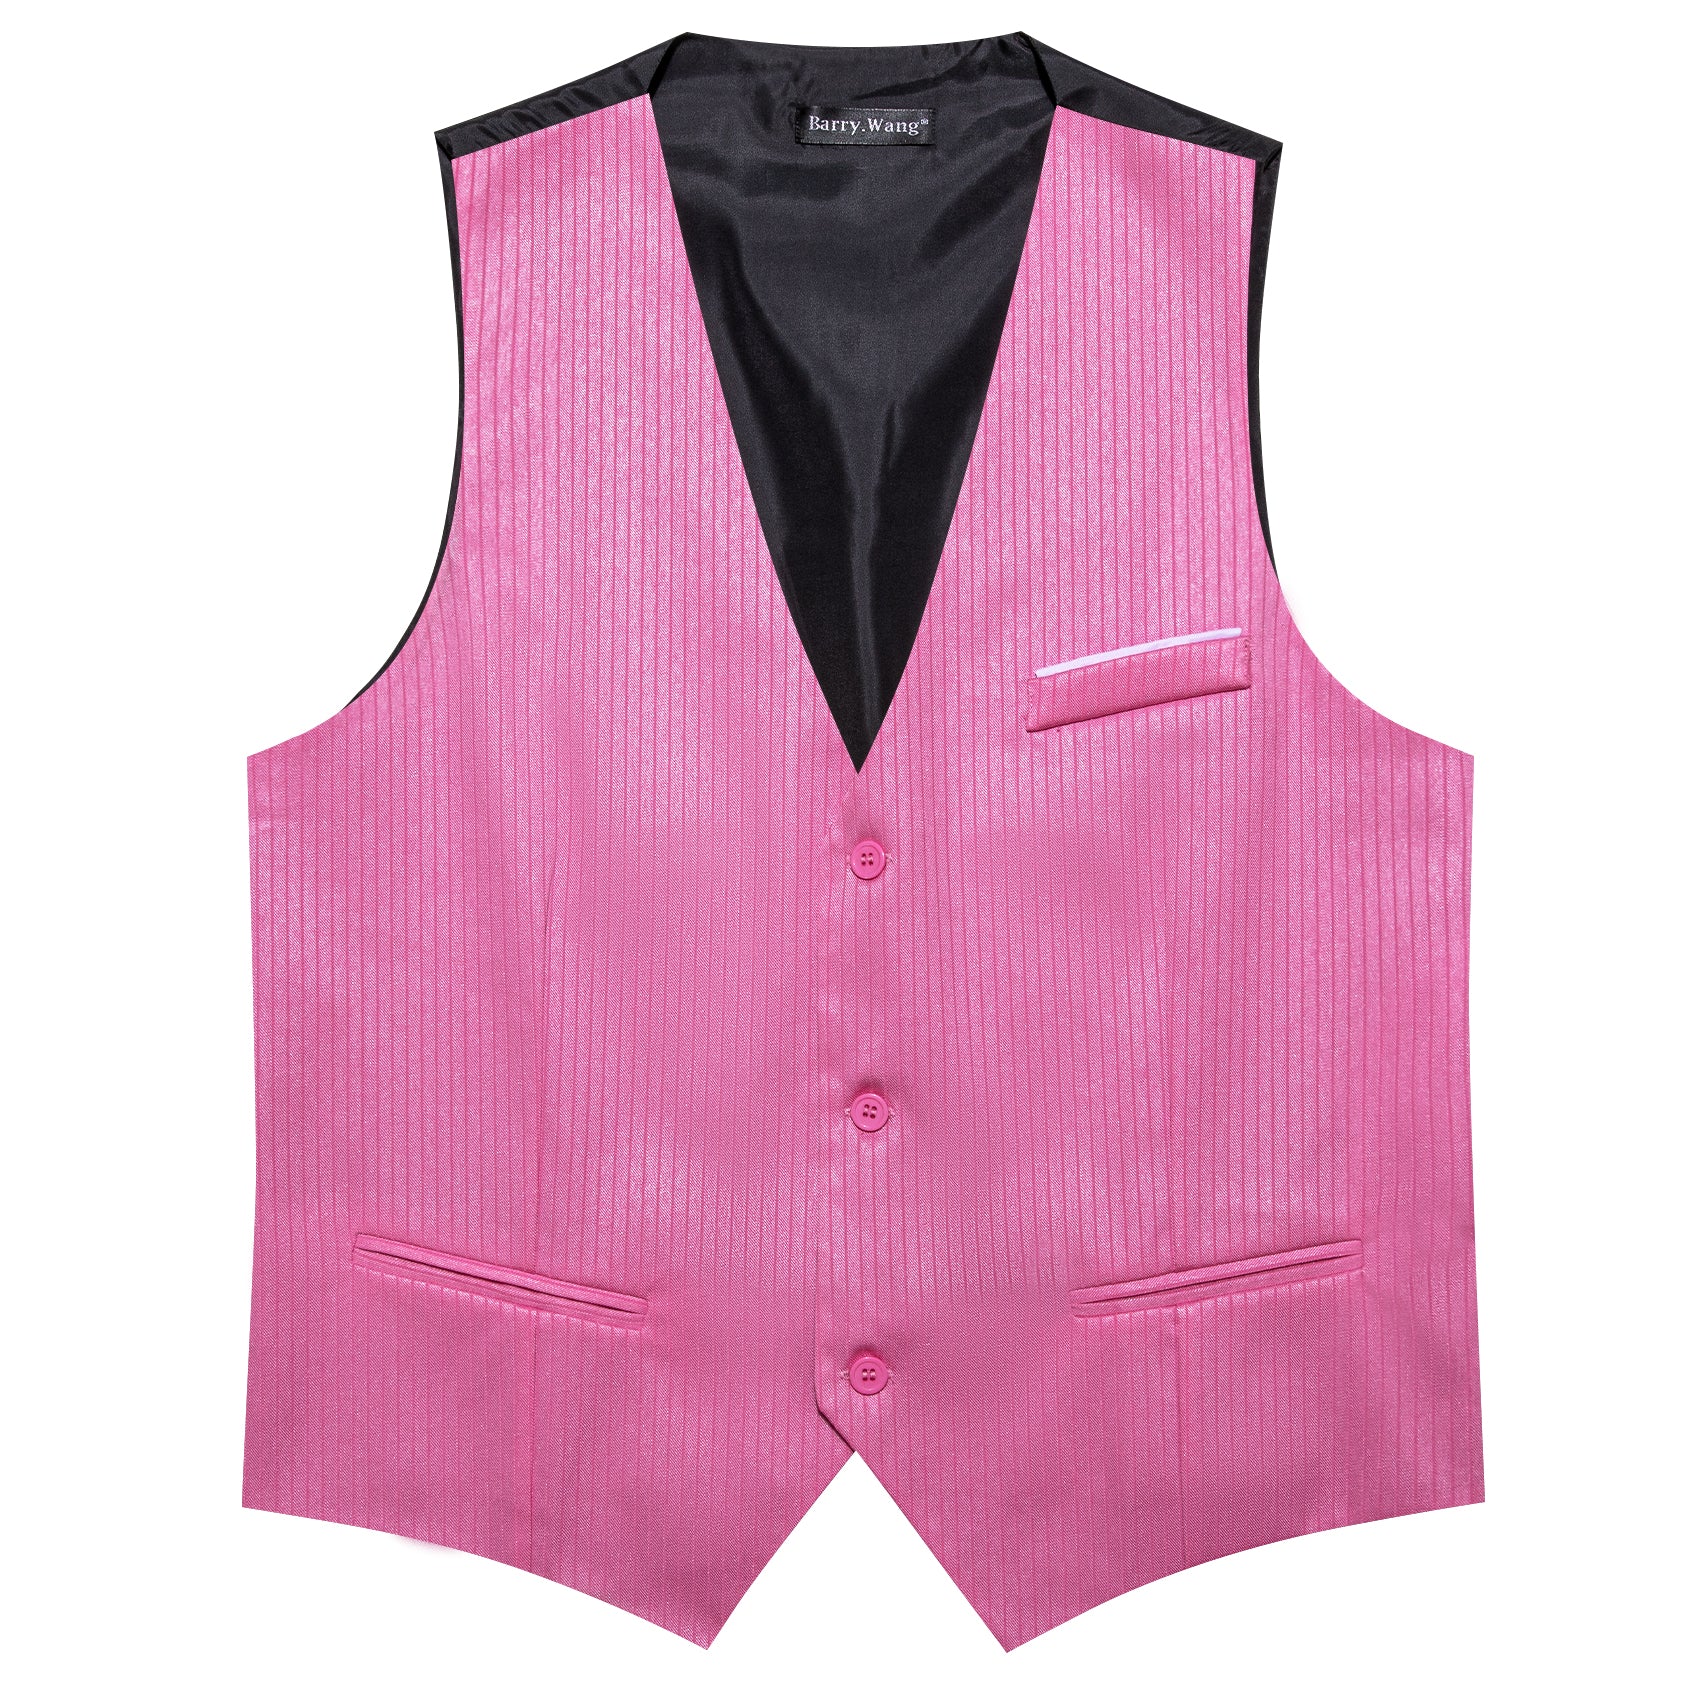 Barry.wang lilac Solid Business Vest Suit